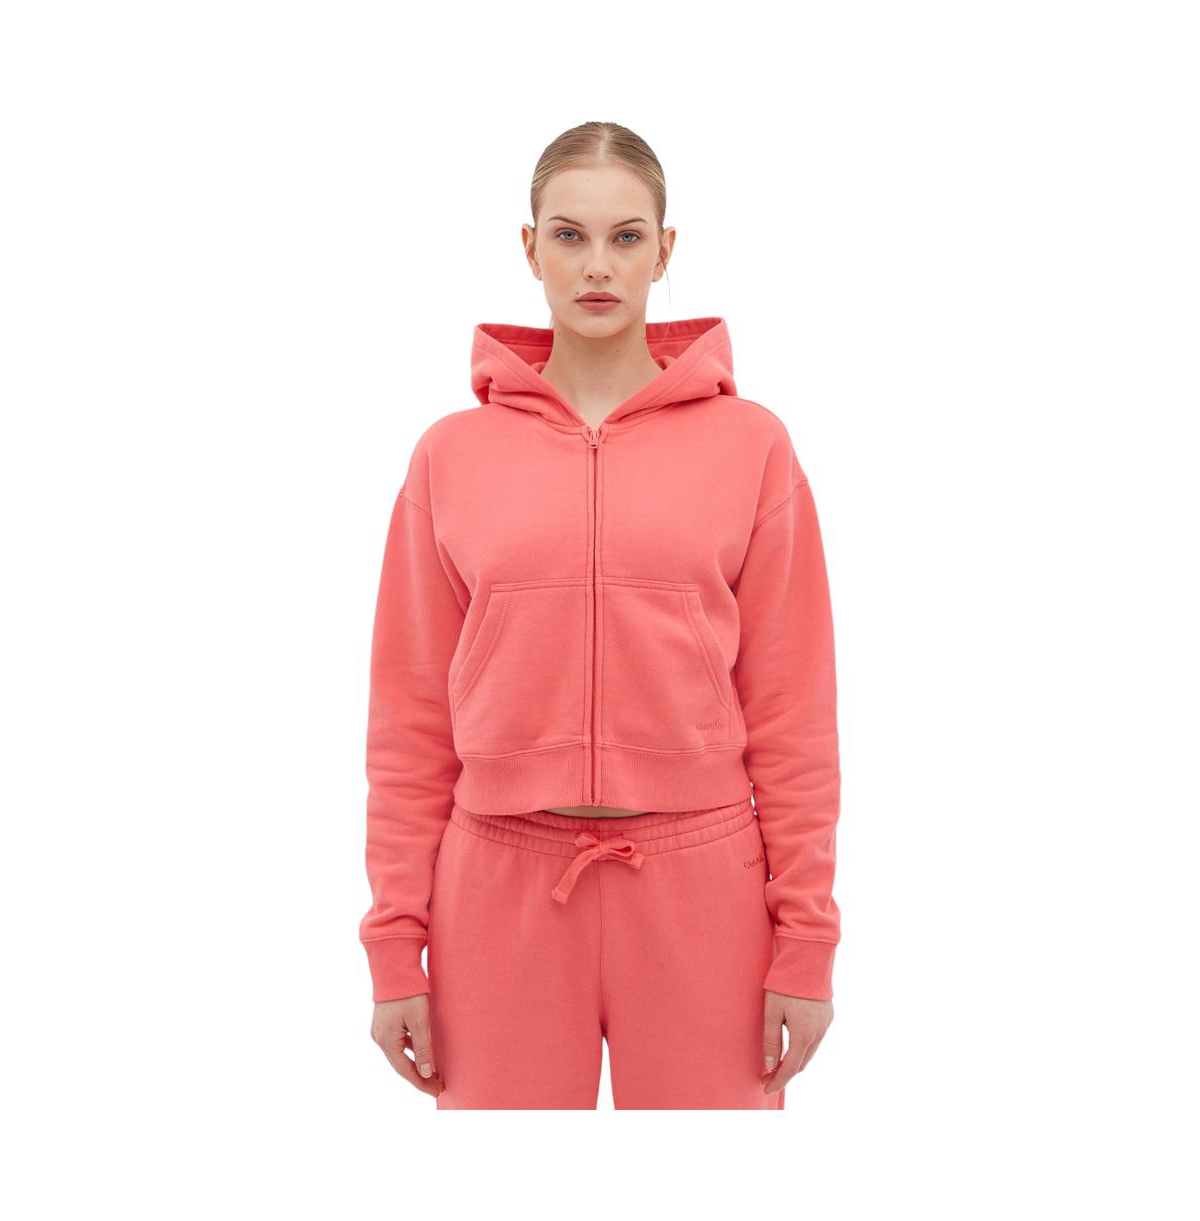 Women's Whitley Eco-Fleece Cropped Zip Hoodie - BLEH10502 - Coral punch